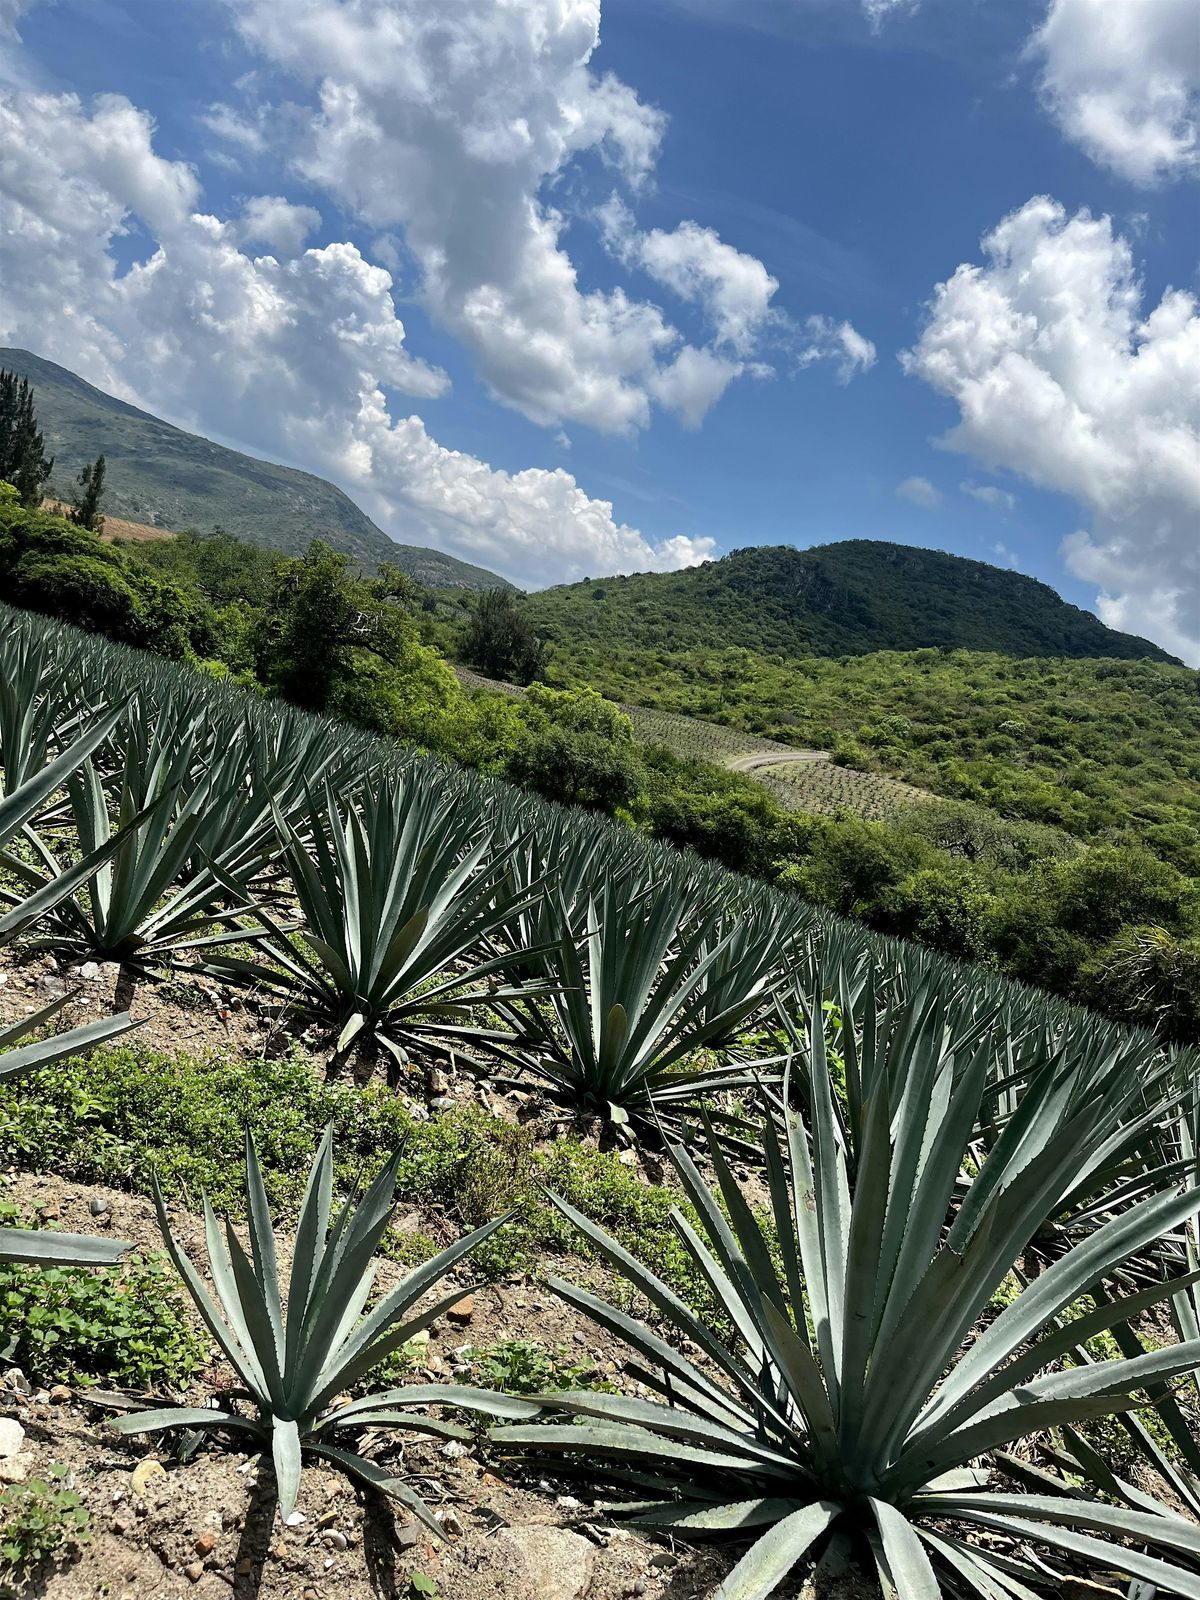 Mezcal Masterclass & Tasting: a Terroir study of the landscape of Oaxaca